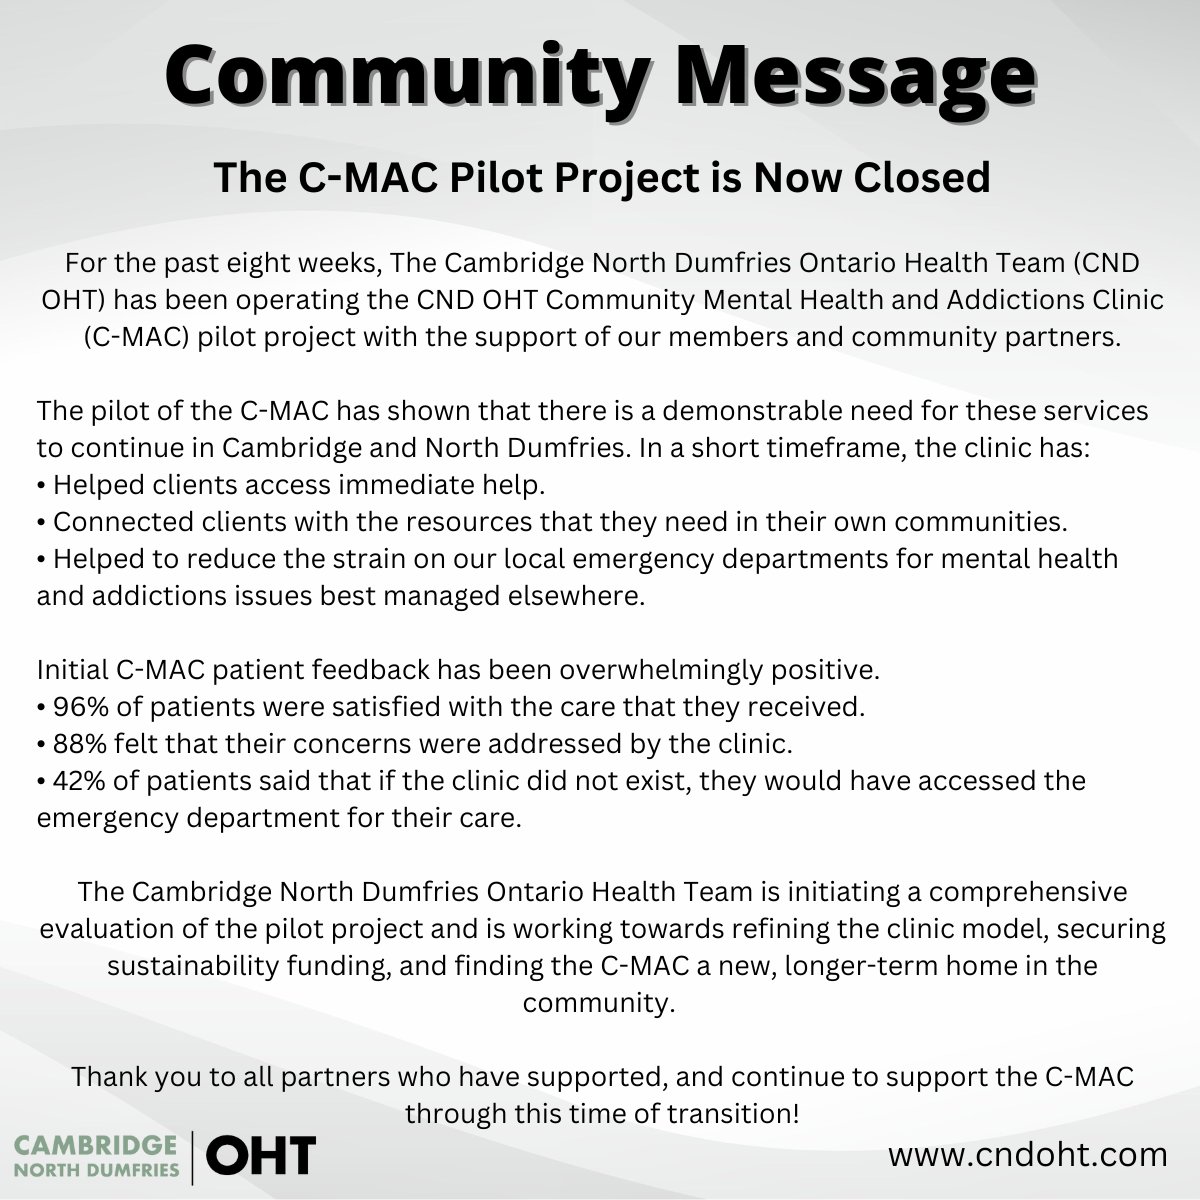 A Community Message from the @CndOht #CNDOHT #OHT #OntarioHealthTeam